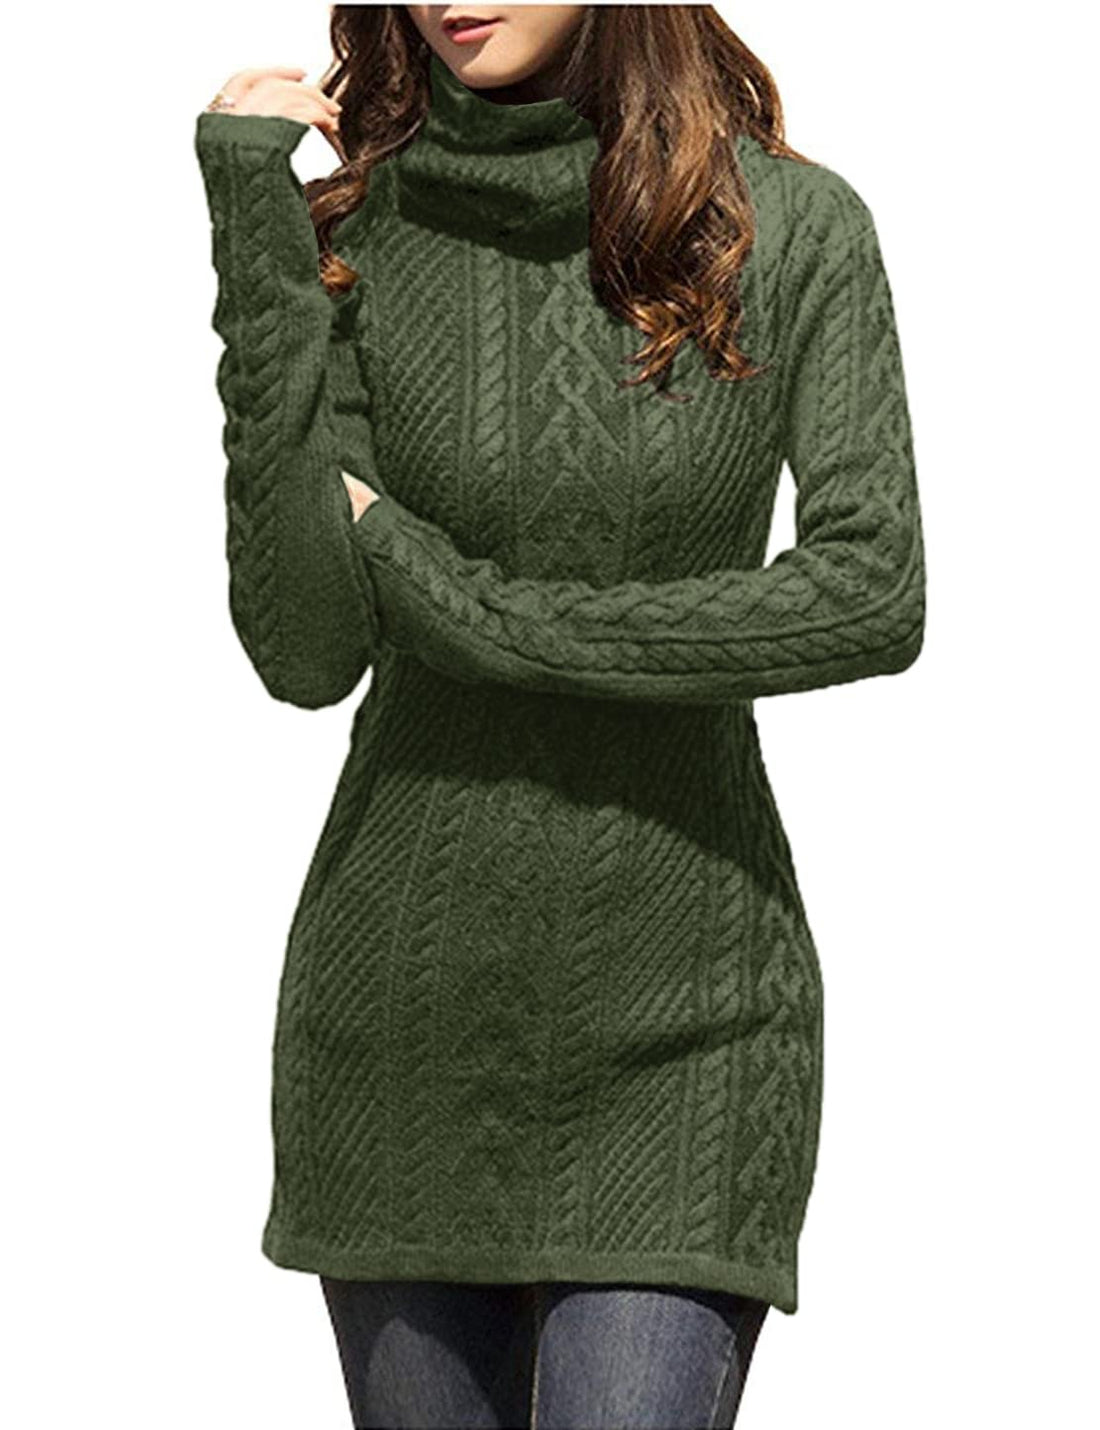 v28 Women Polo Neck Turtleneck Knit Stretchable Elasticity Long Slim Sweater (ArmyGreen, m)